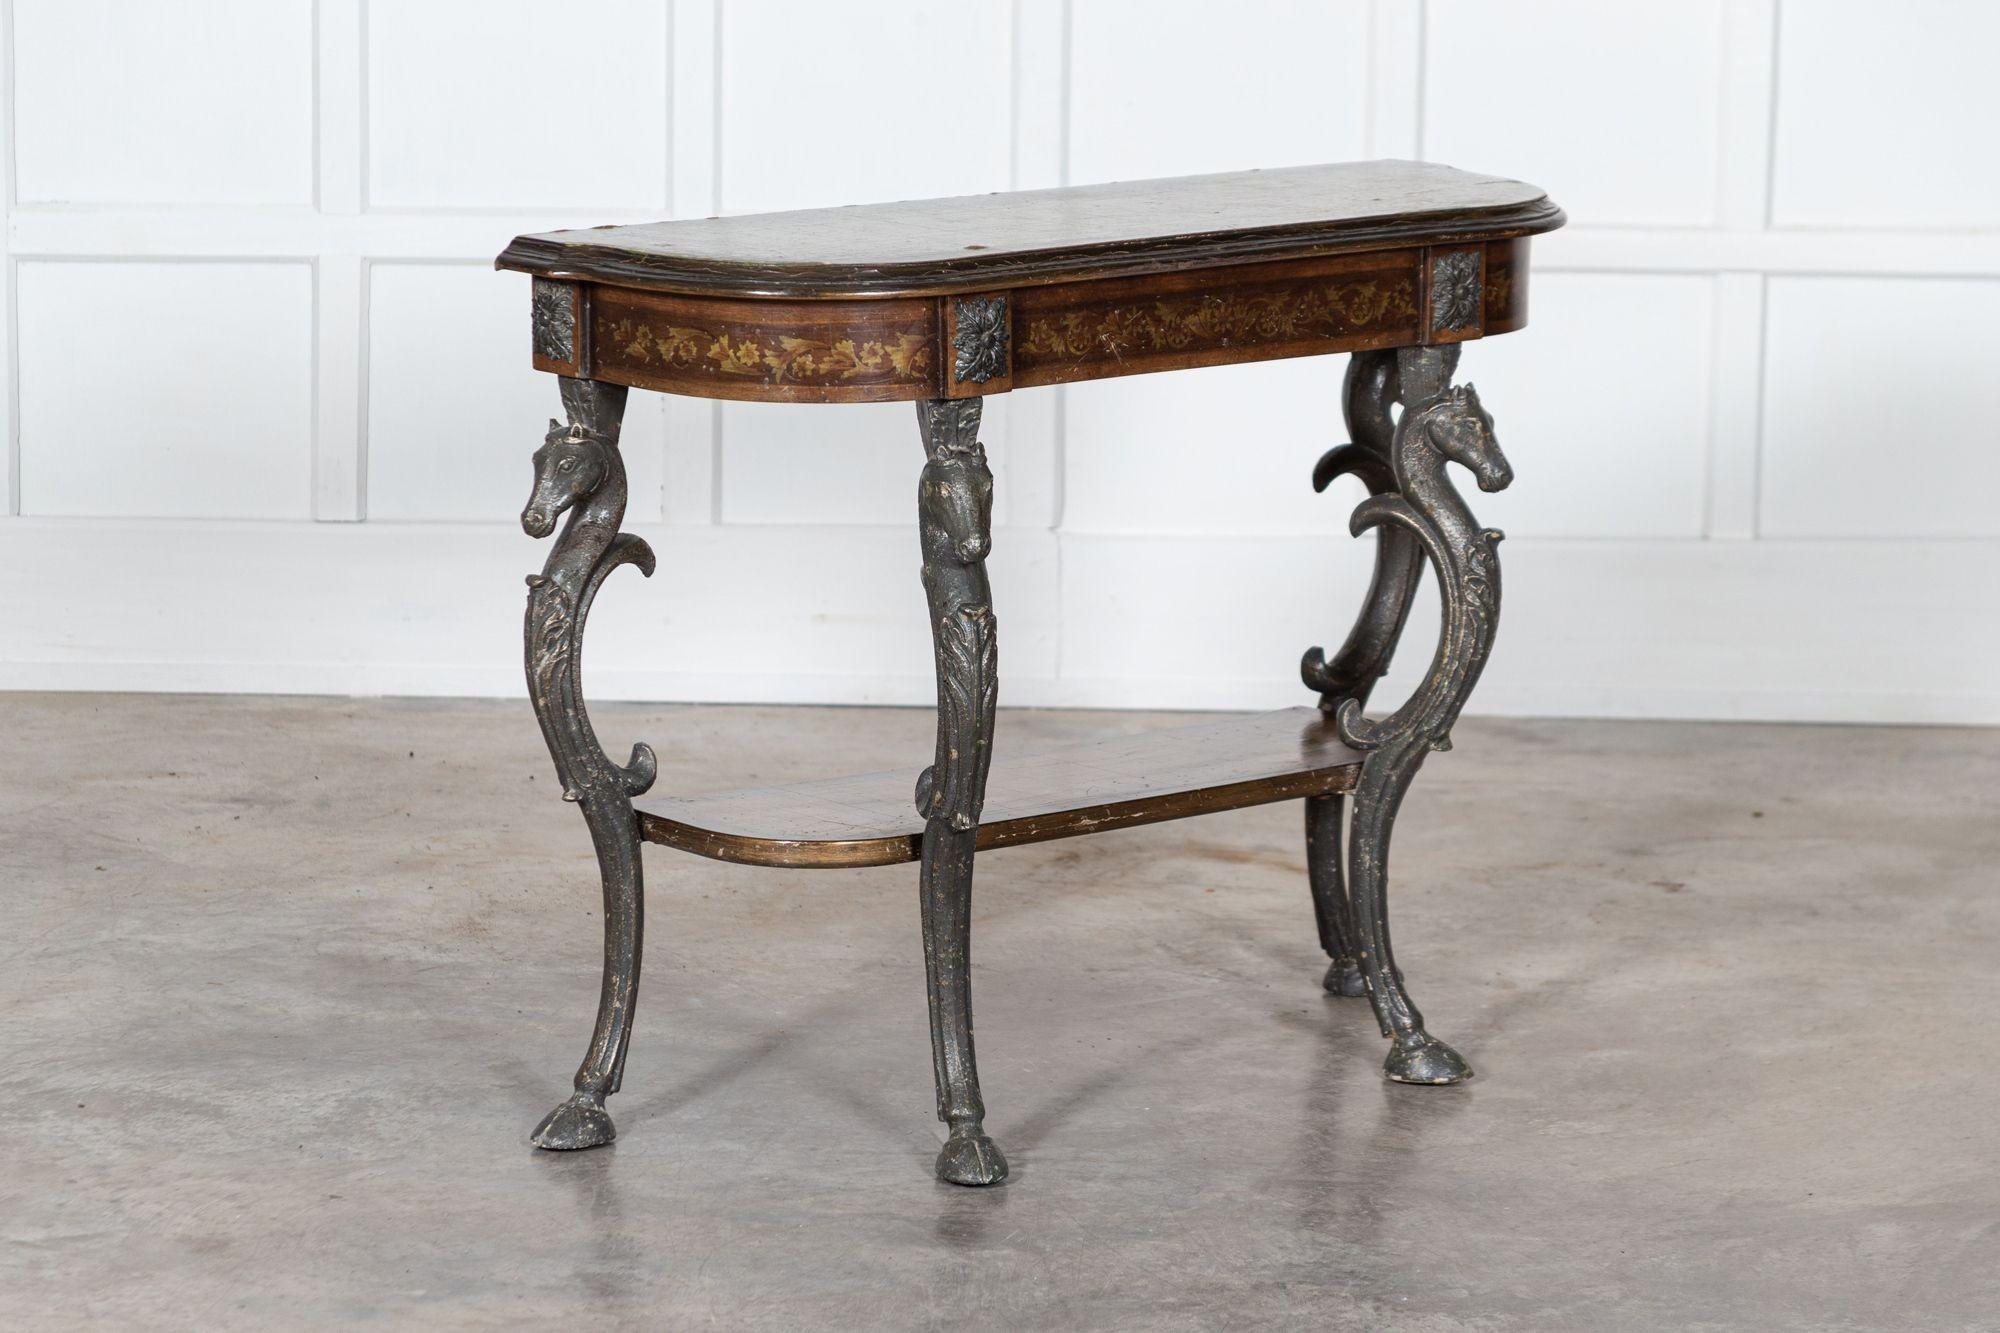 circa Mid-late 20th century
Midcentury Italian decorative console table
(Composite Legs)
sku 1388
Measures: W106 x D37 x H82 cm.